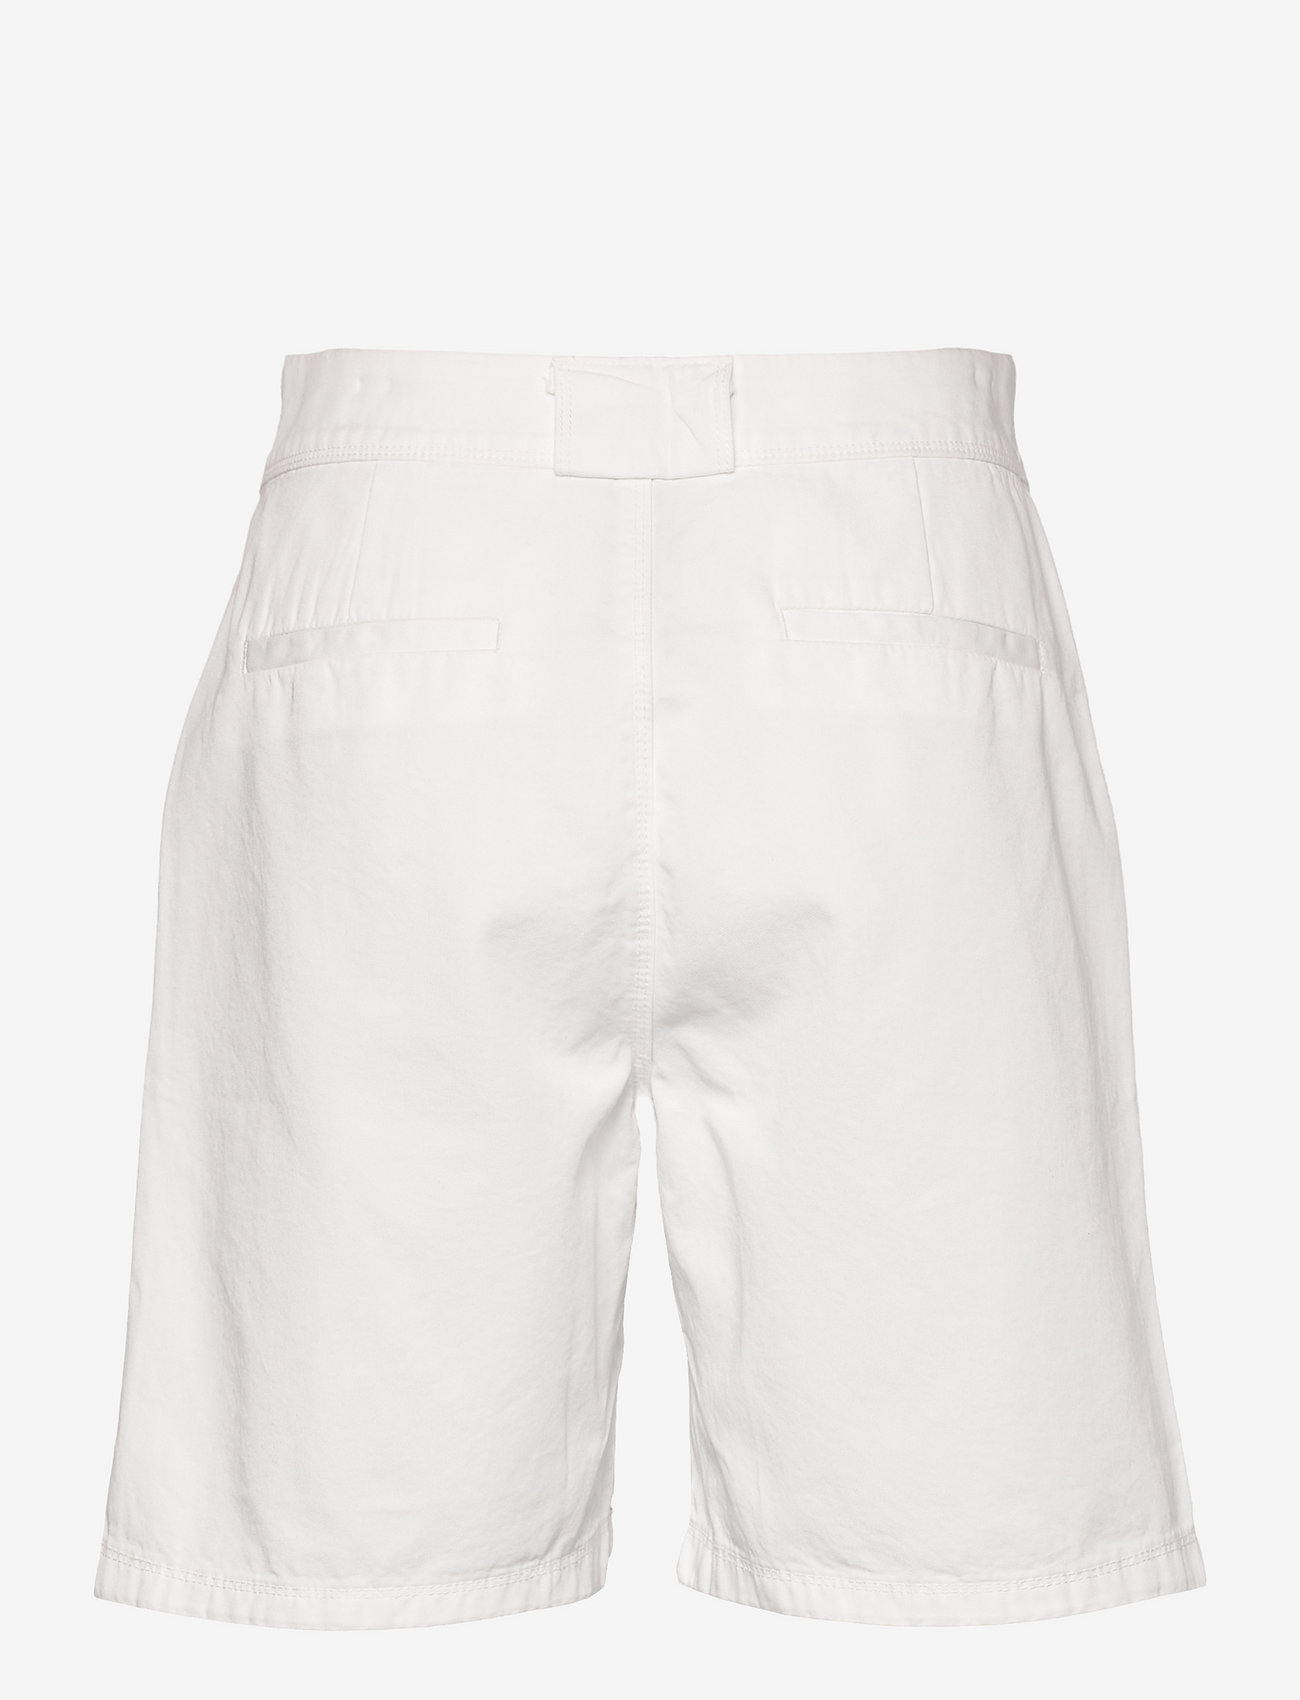 Esprit Casual - Shorts woven - chino-shorts - white - 1